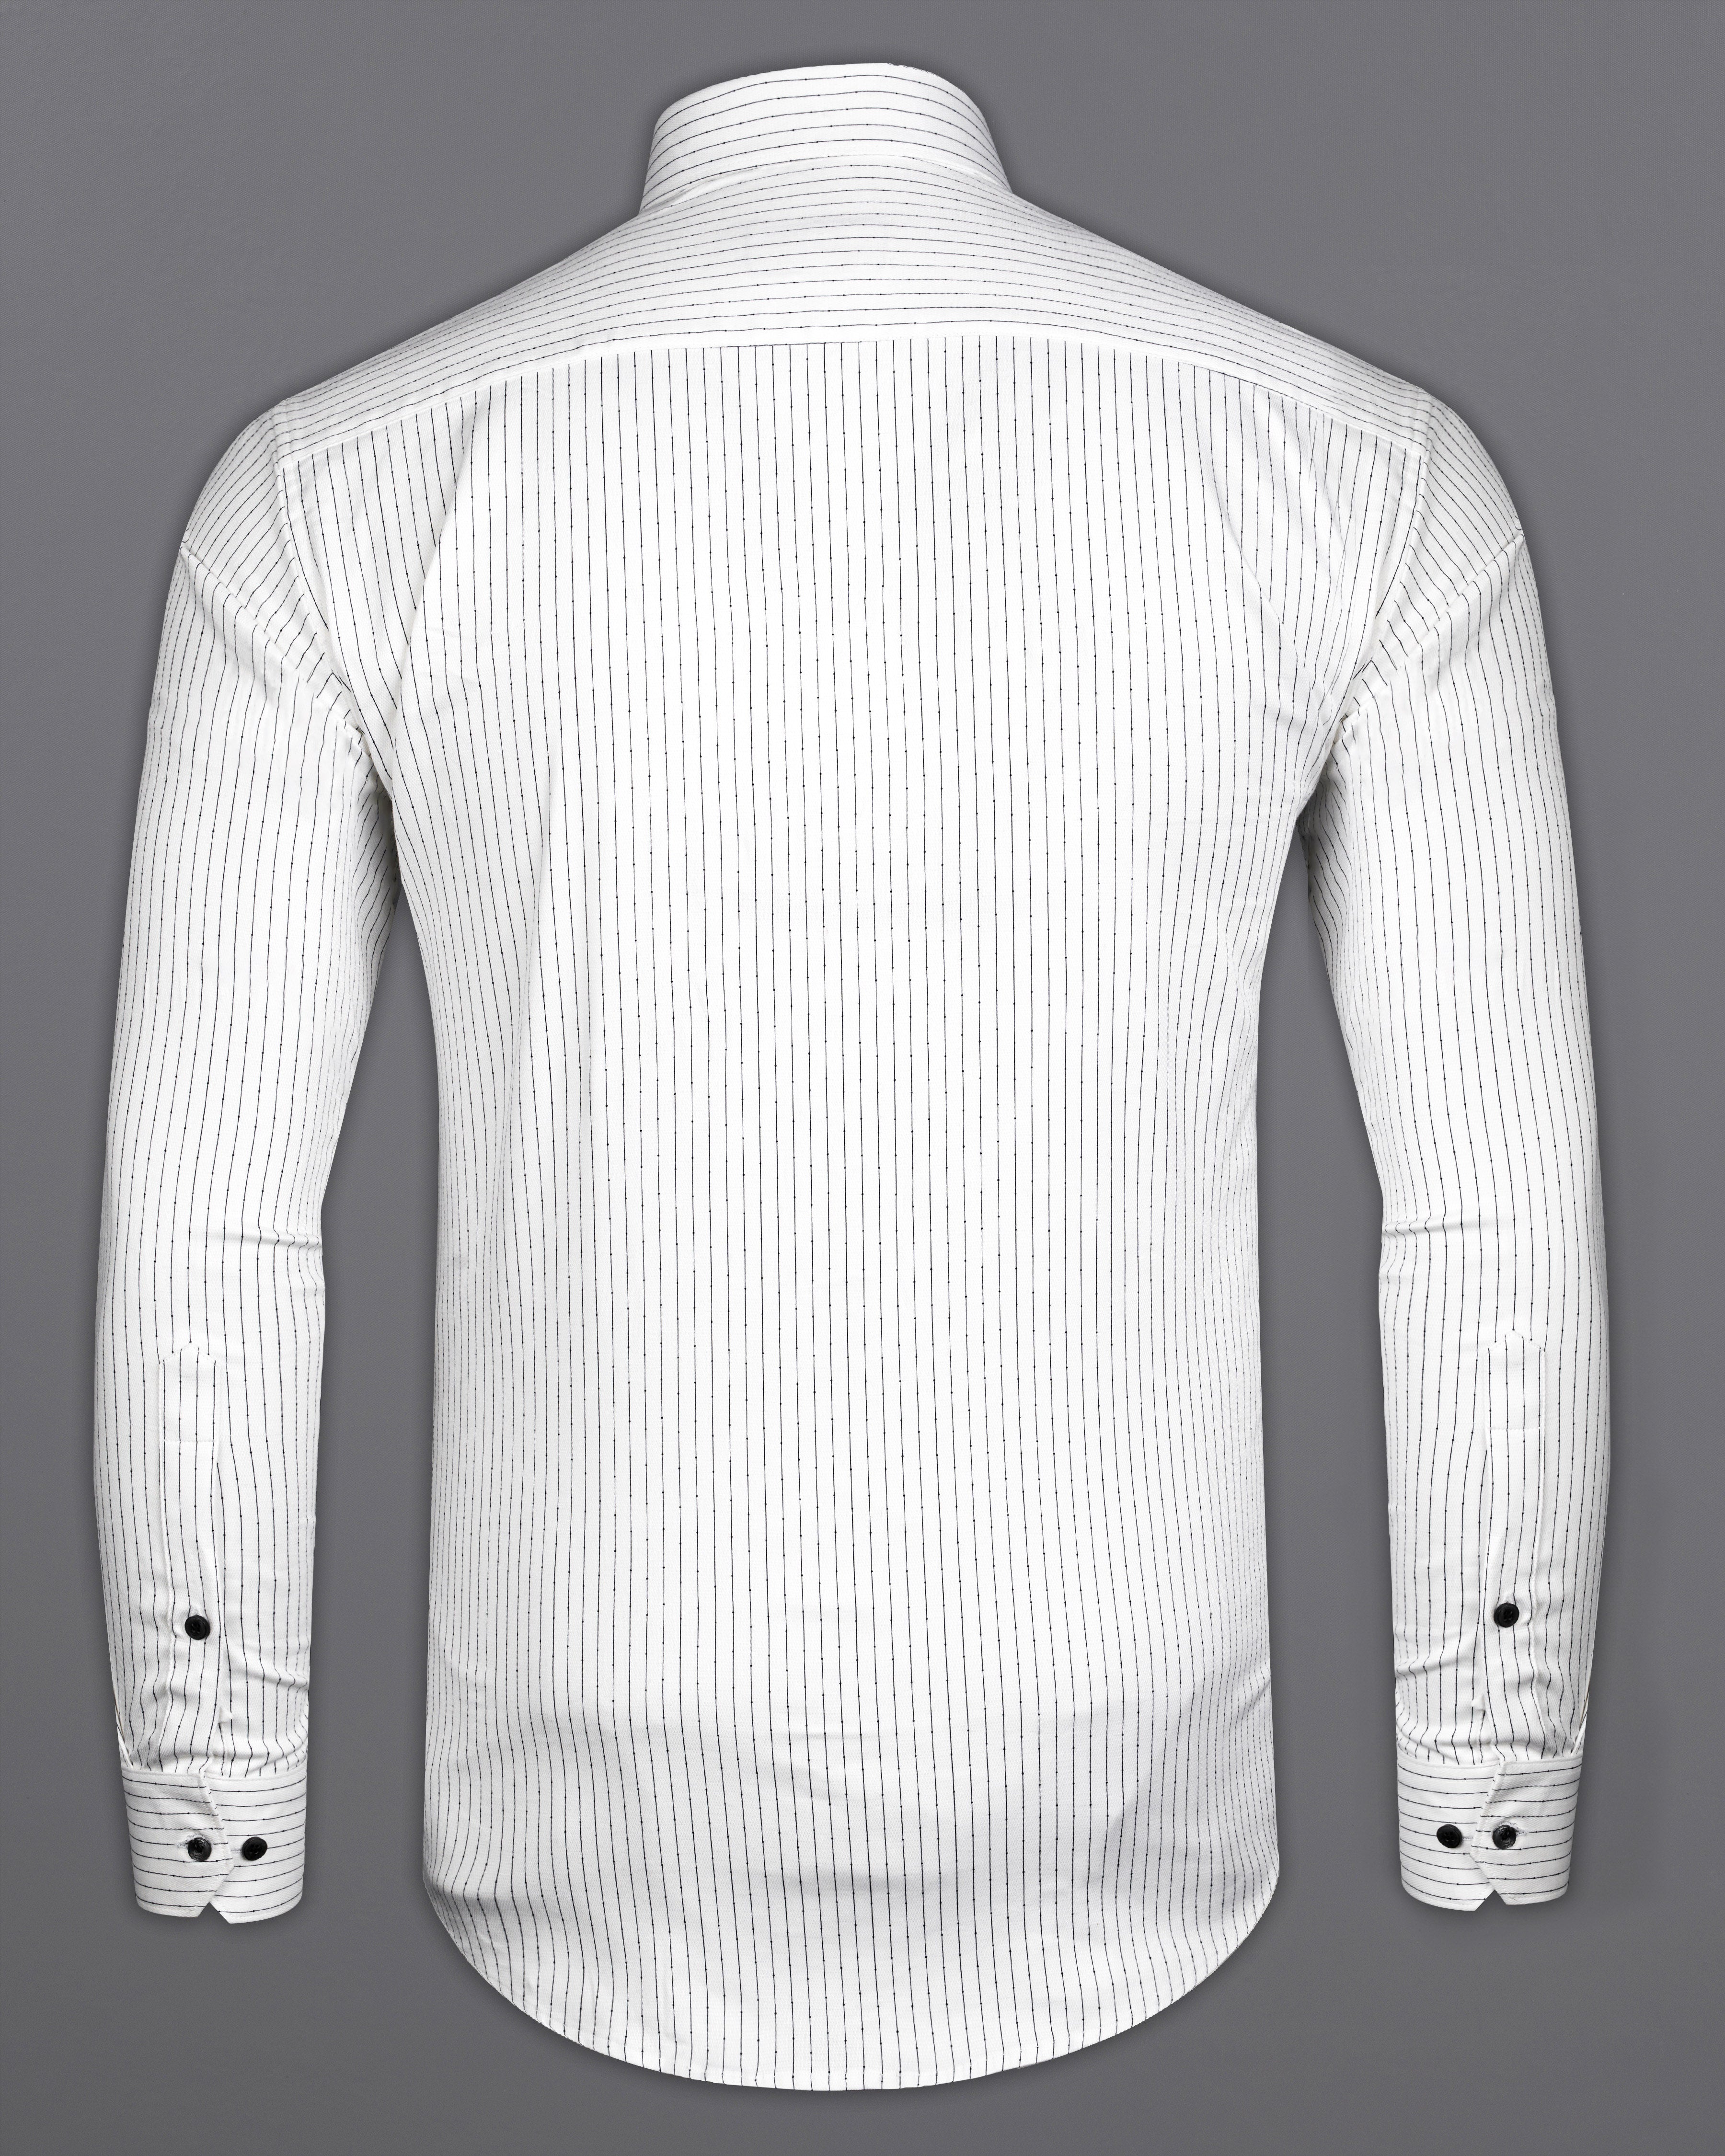 Bright White with Black Striped Dobby Textured Premium Giza Cotton Designer Shirt 9943-BLK-38, 9943-BLK-H-38, 9943-BLK-39, 9943-BLK-H-39, 9943-BLK-40, 9943-BLK-H-40, 9943-BLK-42, 9943-BLK-H-42, 9943-BLK-44, 9943-BLK-H-44, 9943-BLK-46, 9943-BLK-H-46, 9943-BLK-48, 9943-BLK-H-48, 9943-BLK-50, 9943-BLK-H-50, 9943-BLK-52, 9943-BLK-H-52